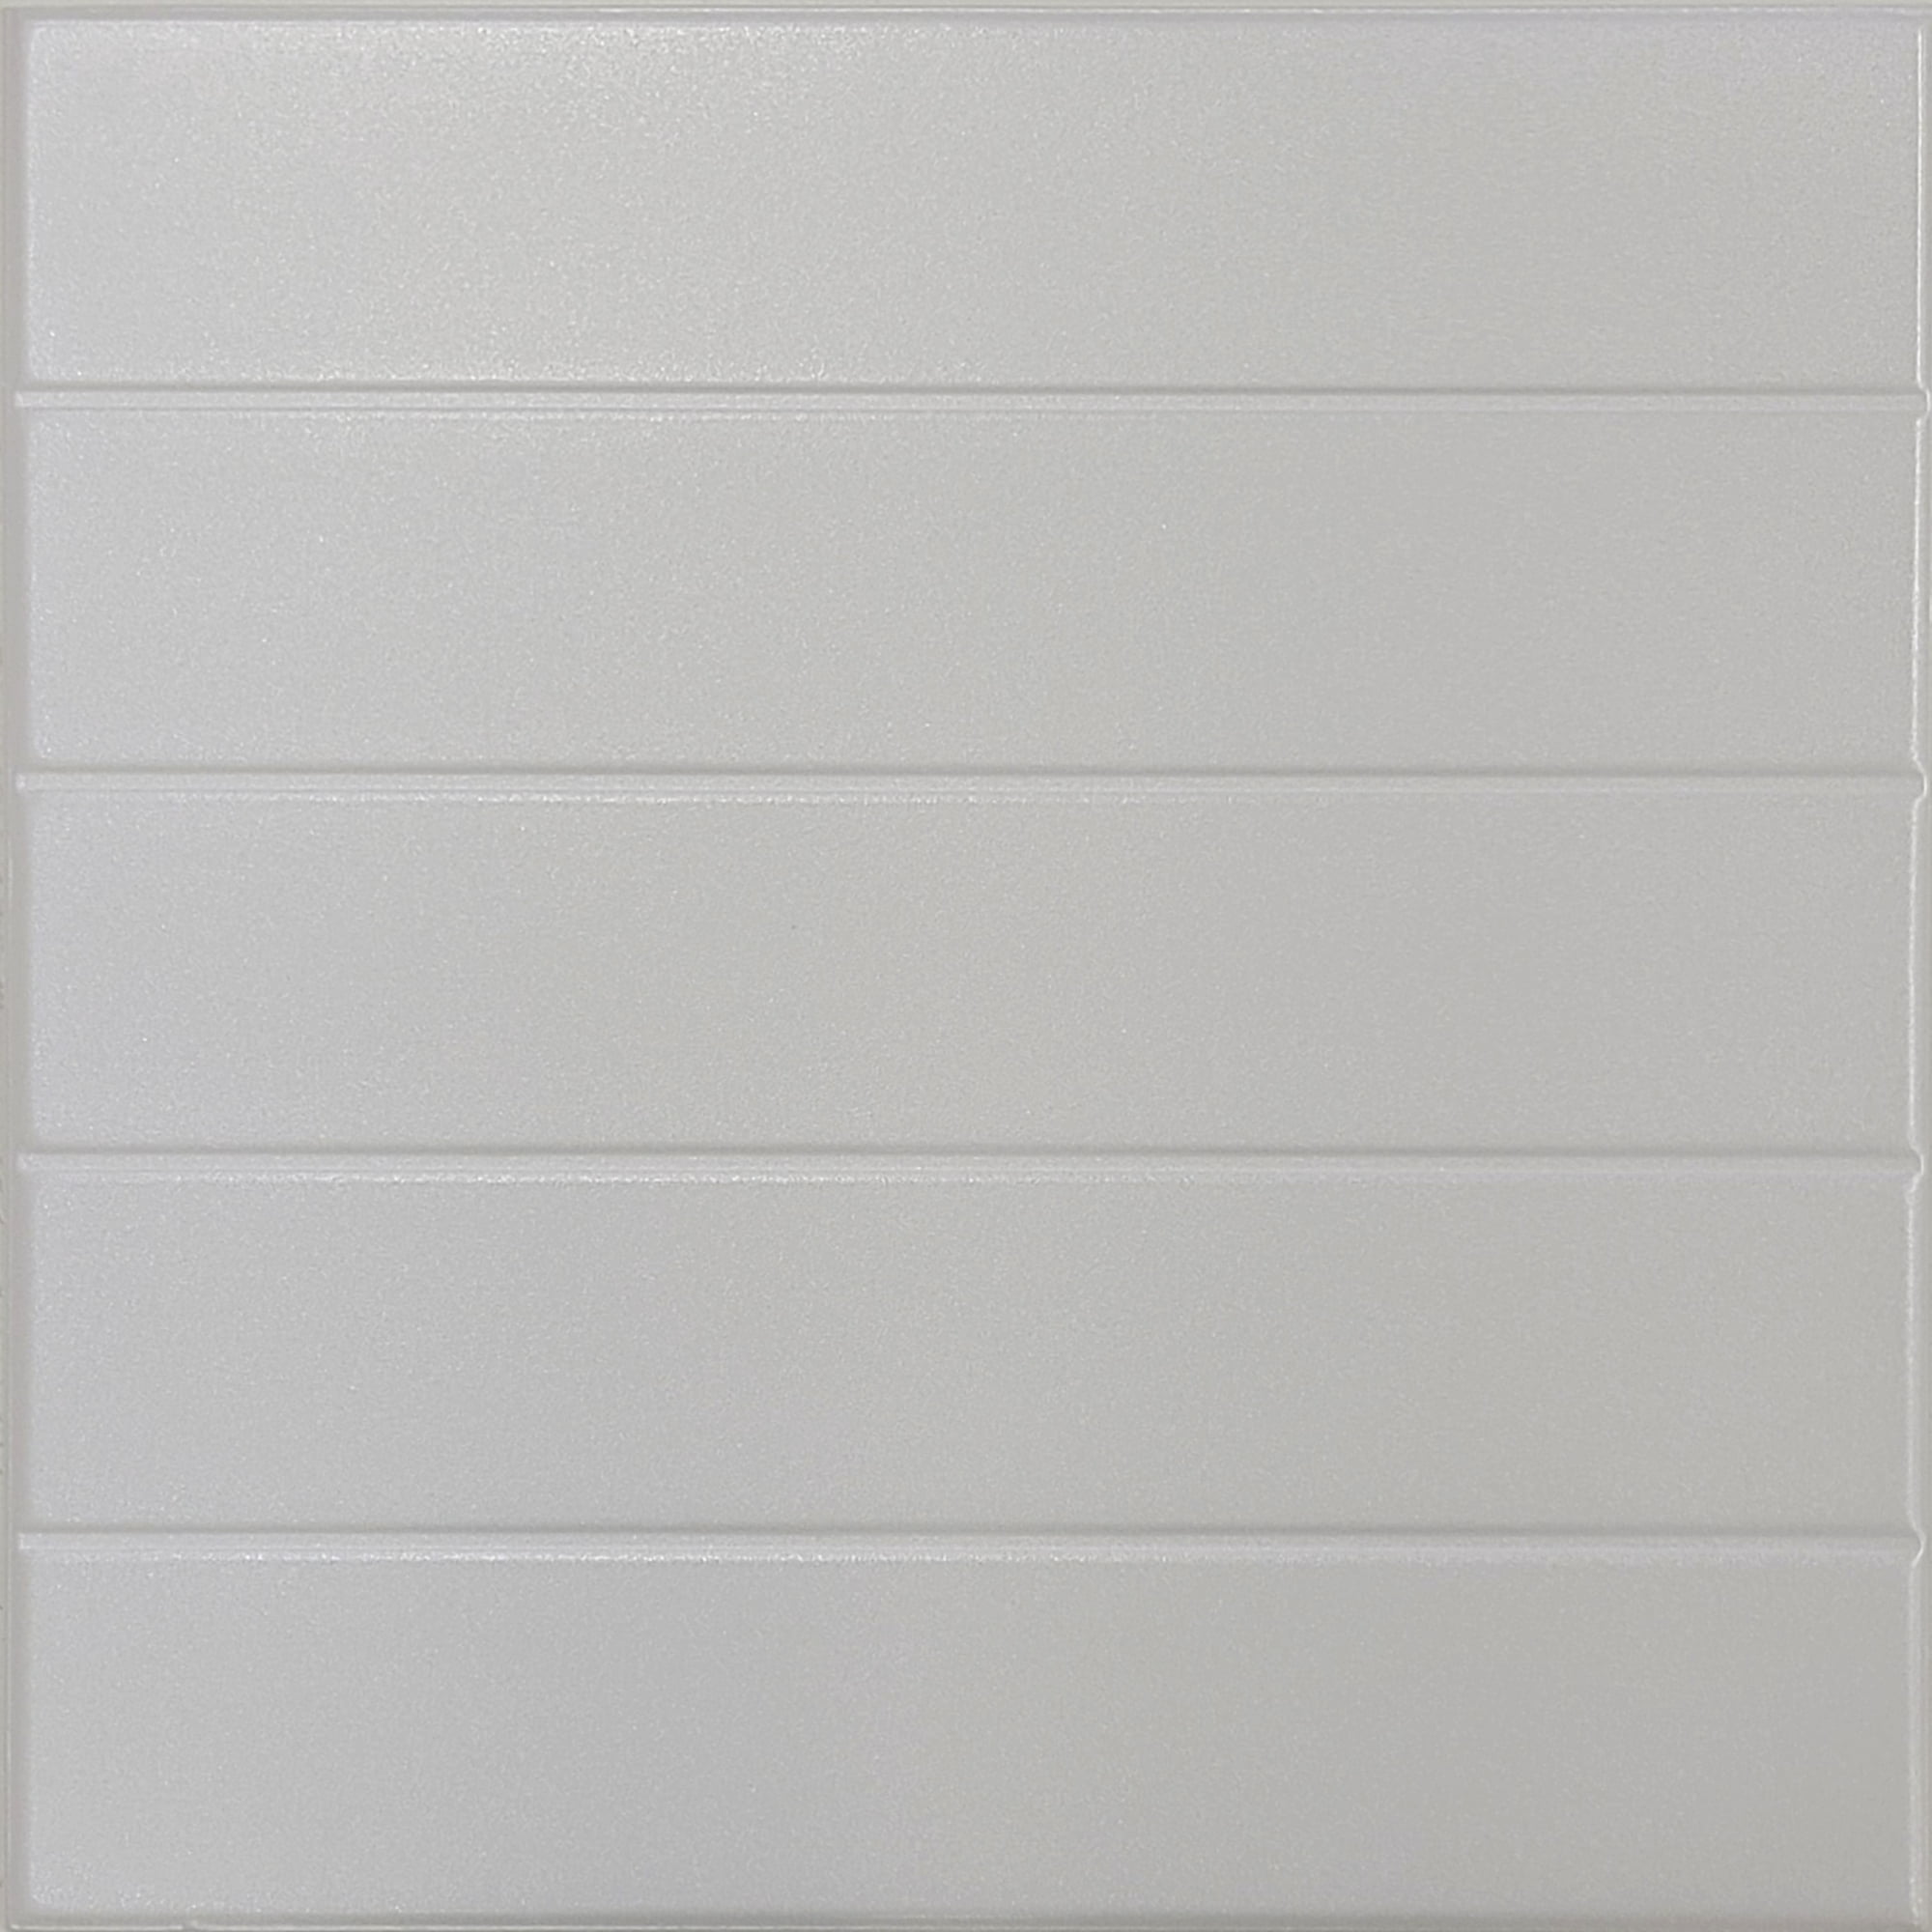 Rm12 Pack Of 24 Styrofoam Ceiling Tiles, Can Ceiling Tiles Be Installed Over Popcorn